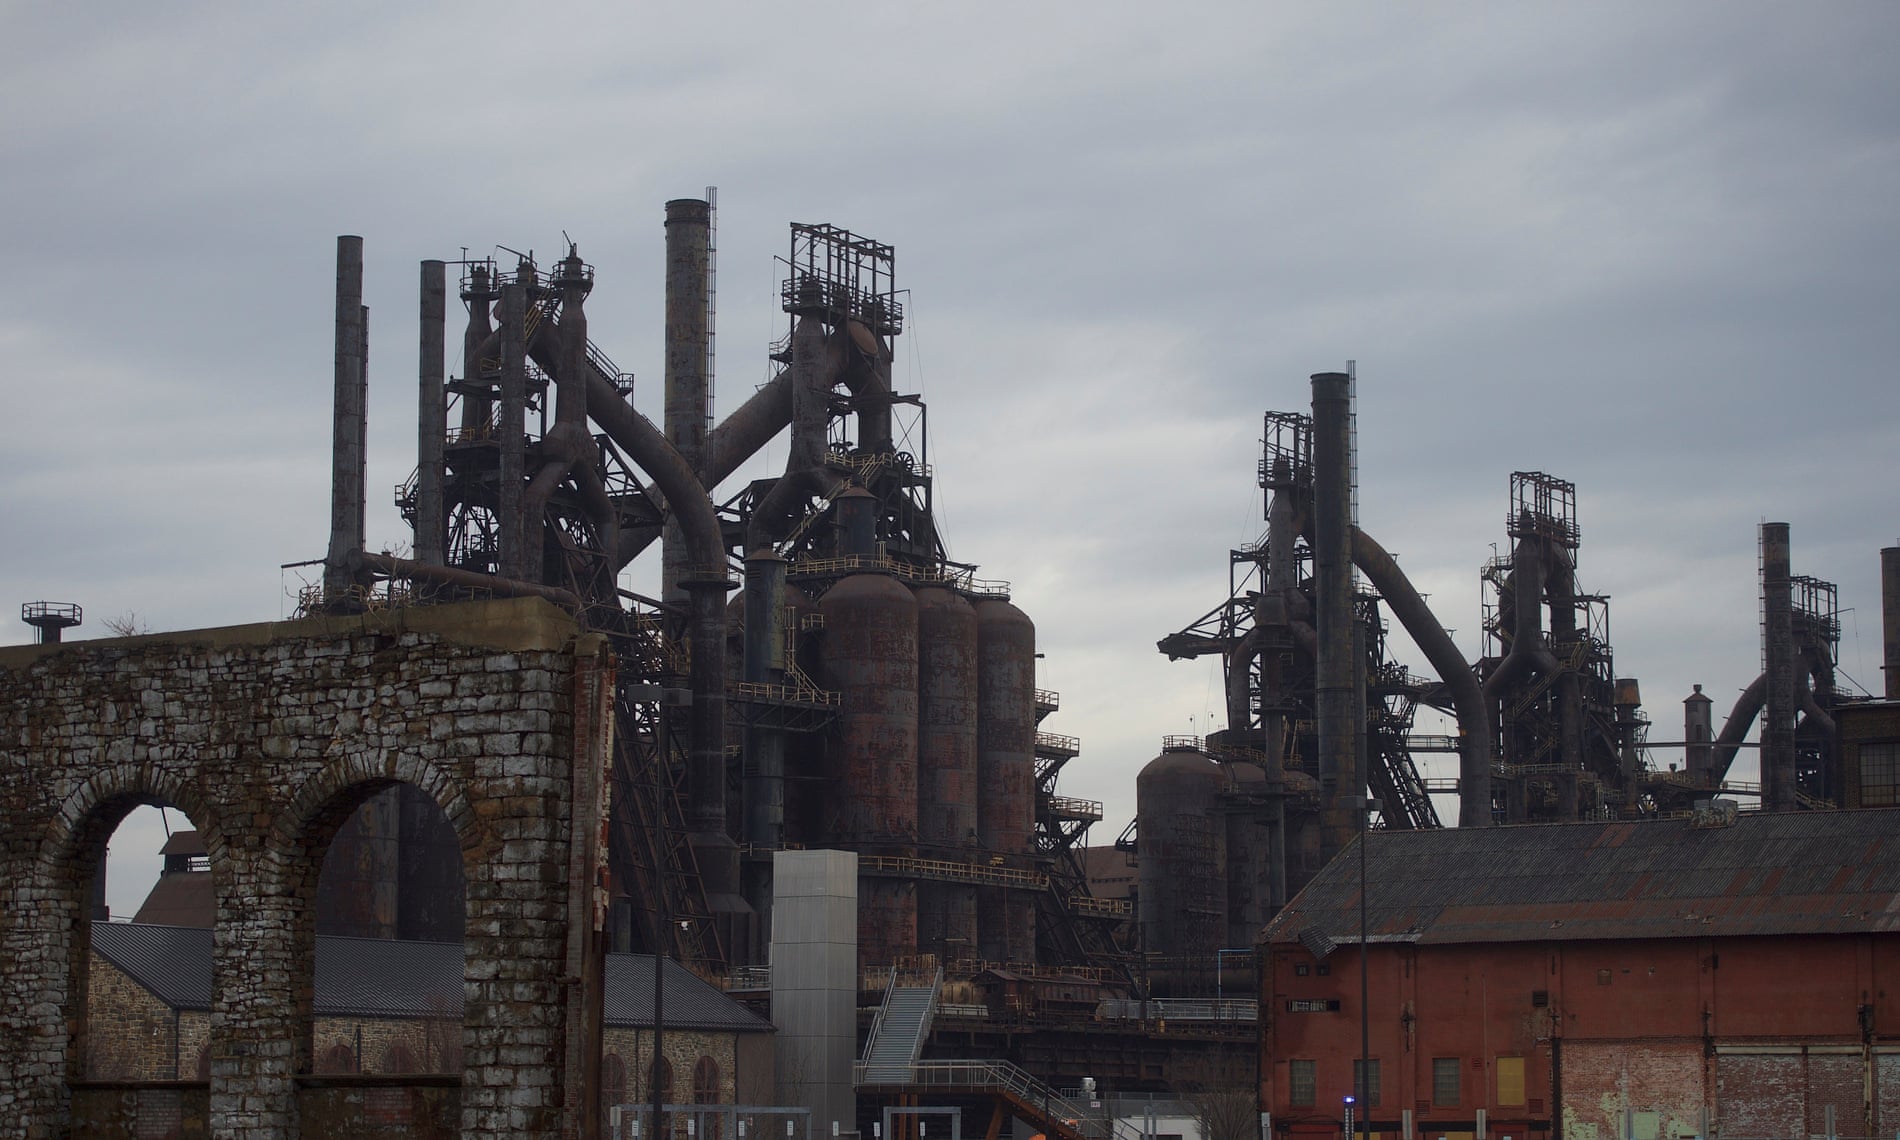 bethlehem steel factory